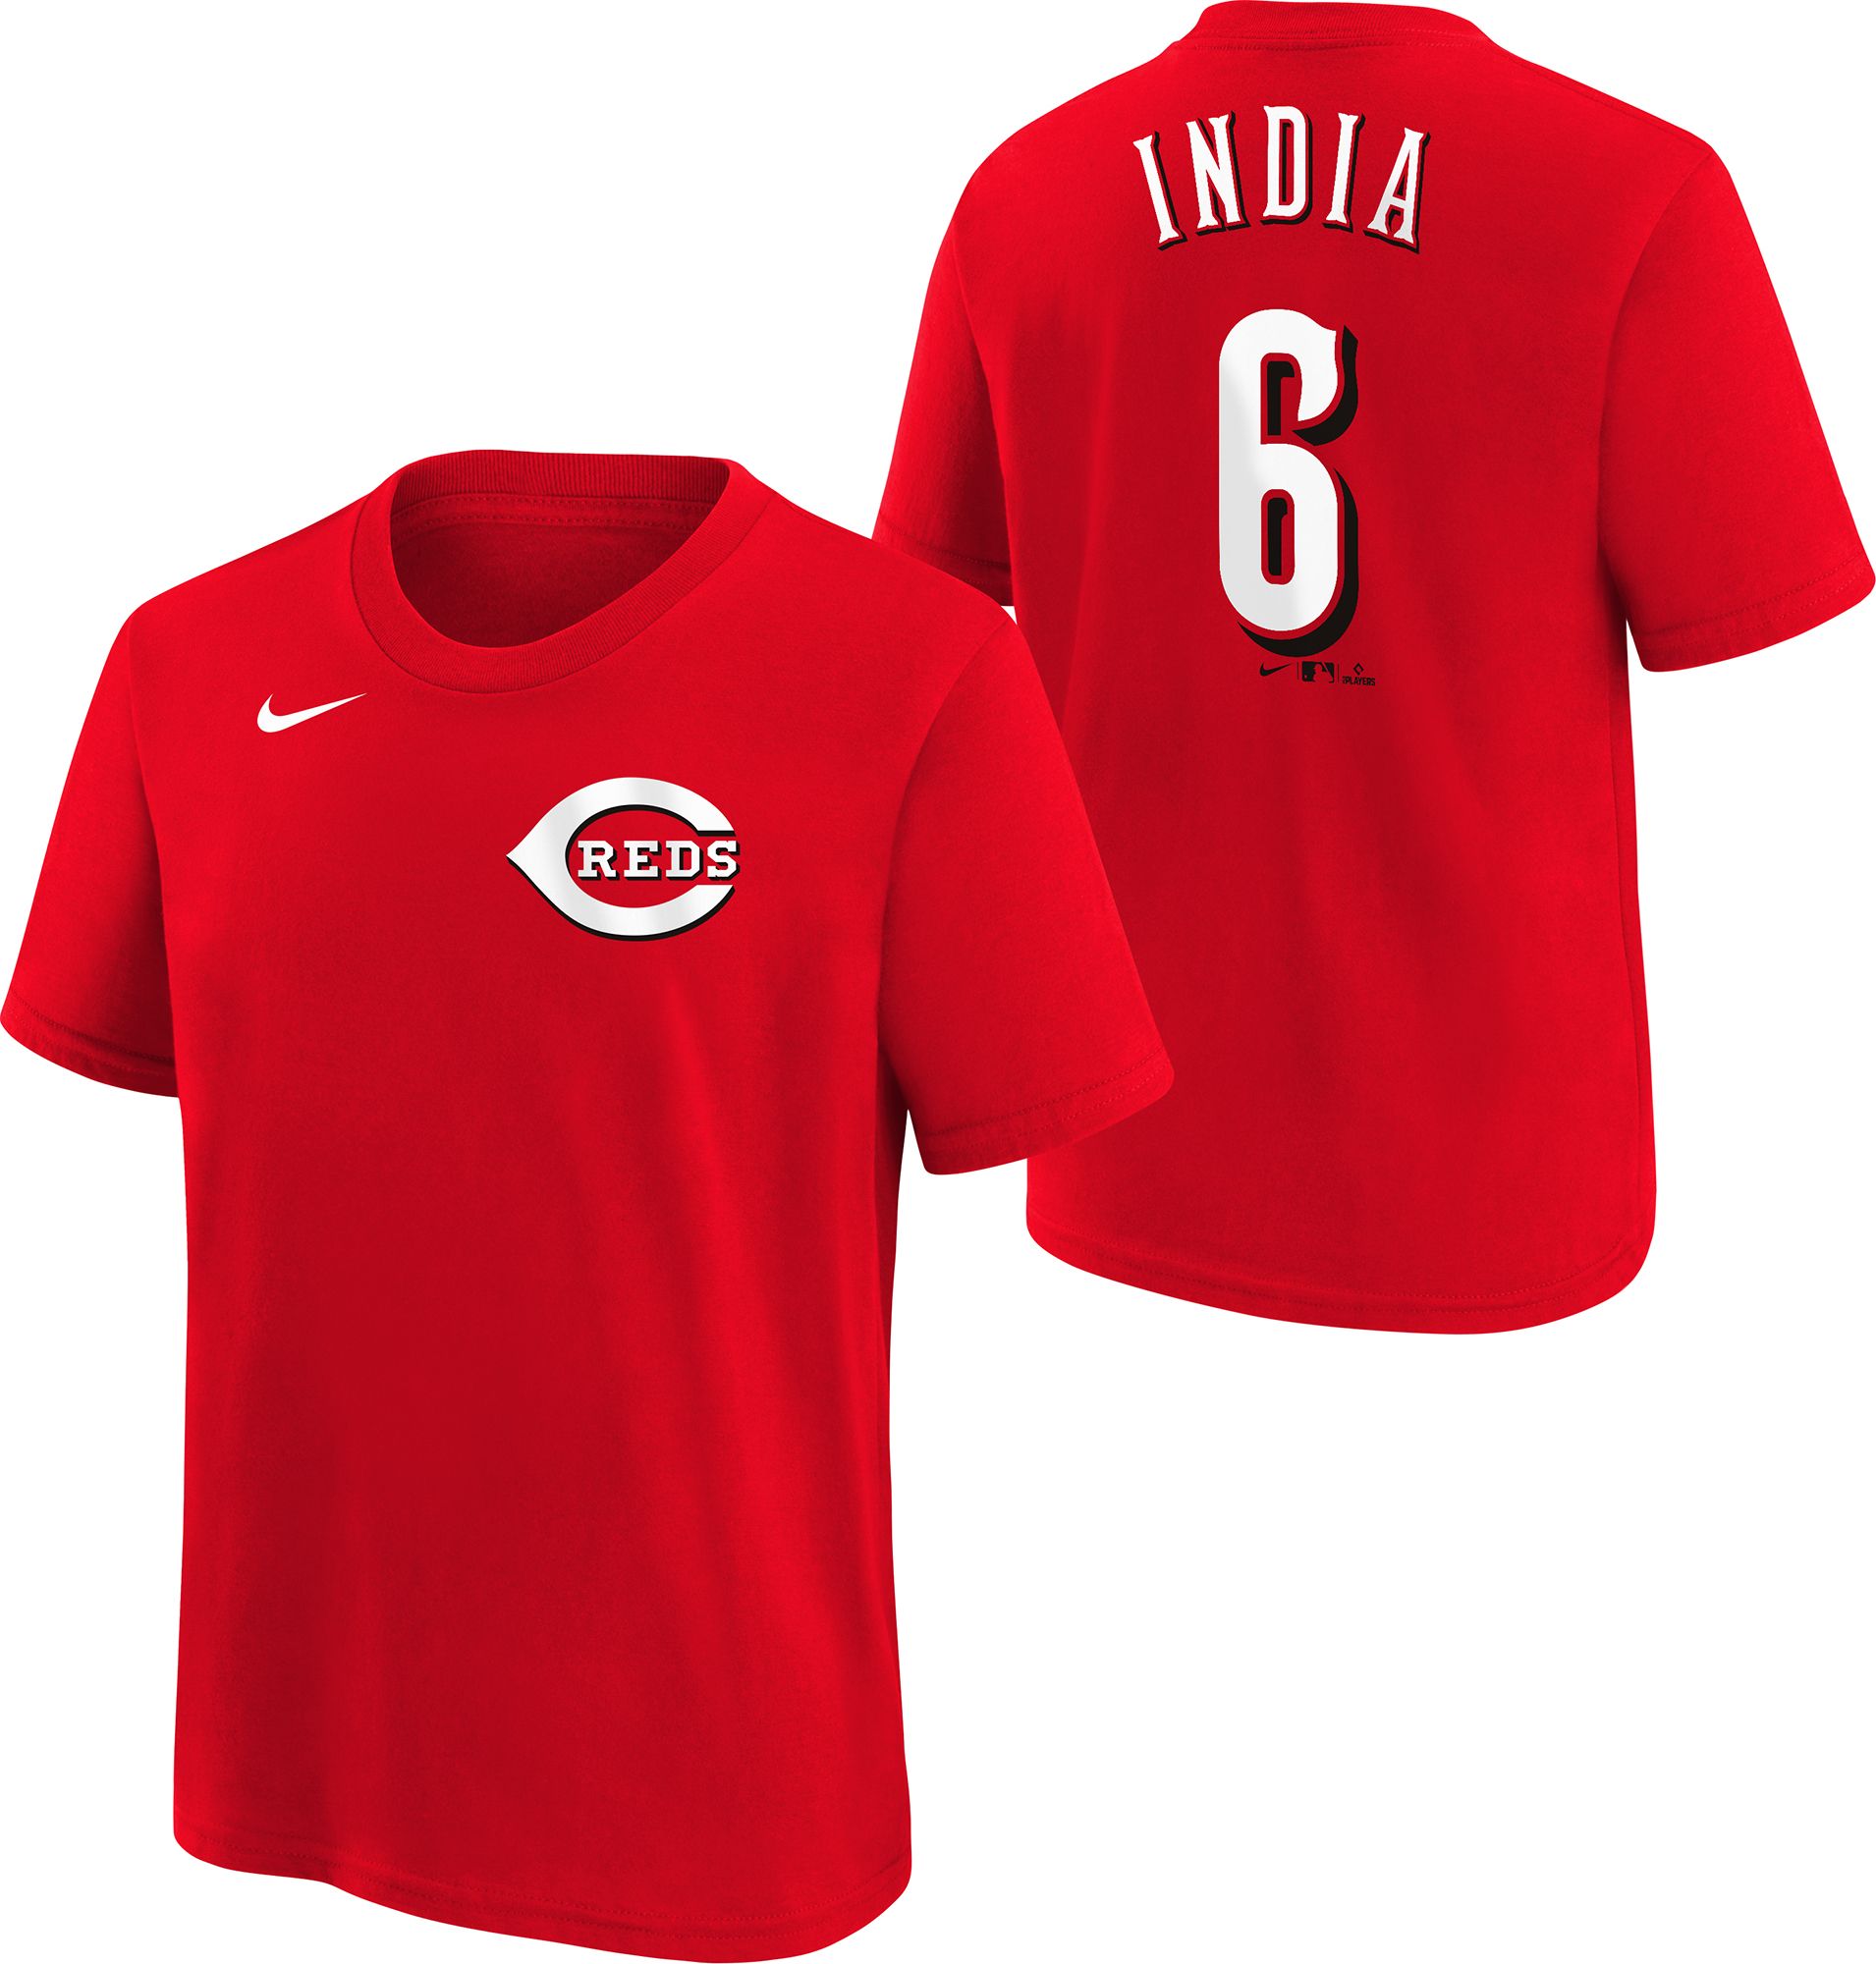 Nike / Youth Cincinnati Reds Jonathan India #6 Red T-Shirt